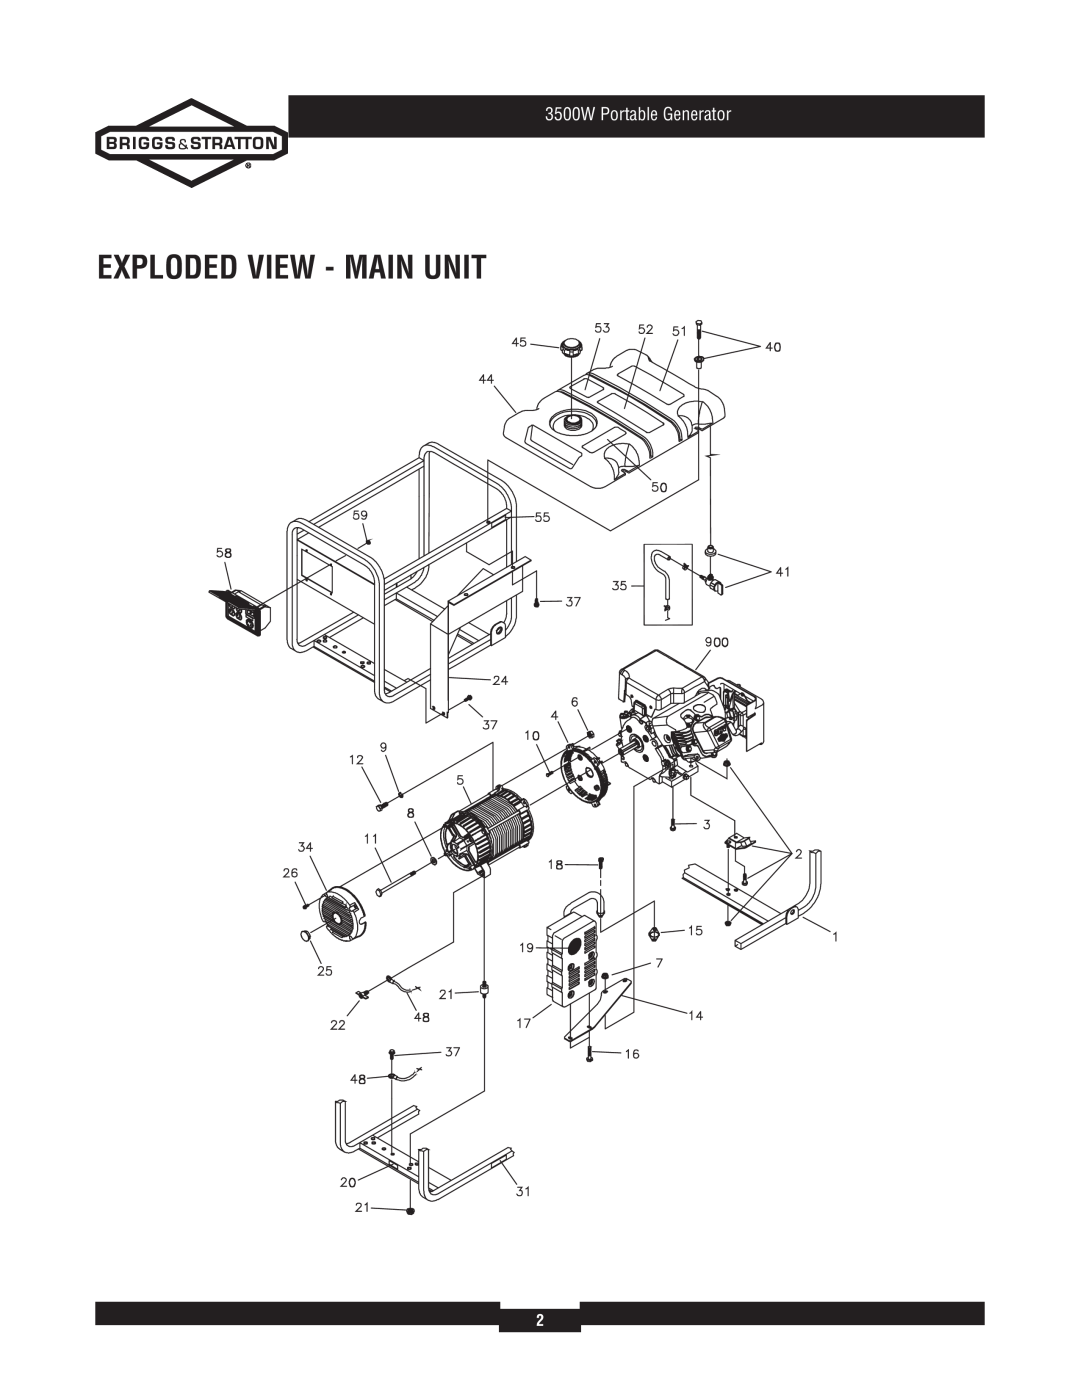 Briggs & Stratton 030208-2 manual Exploded View - Main Unit, 3500W Portable Generator 